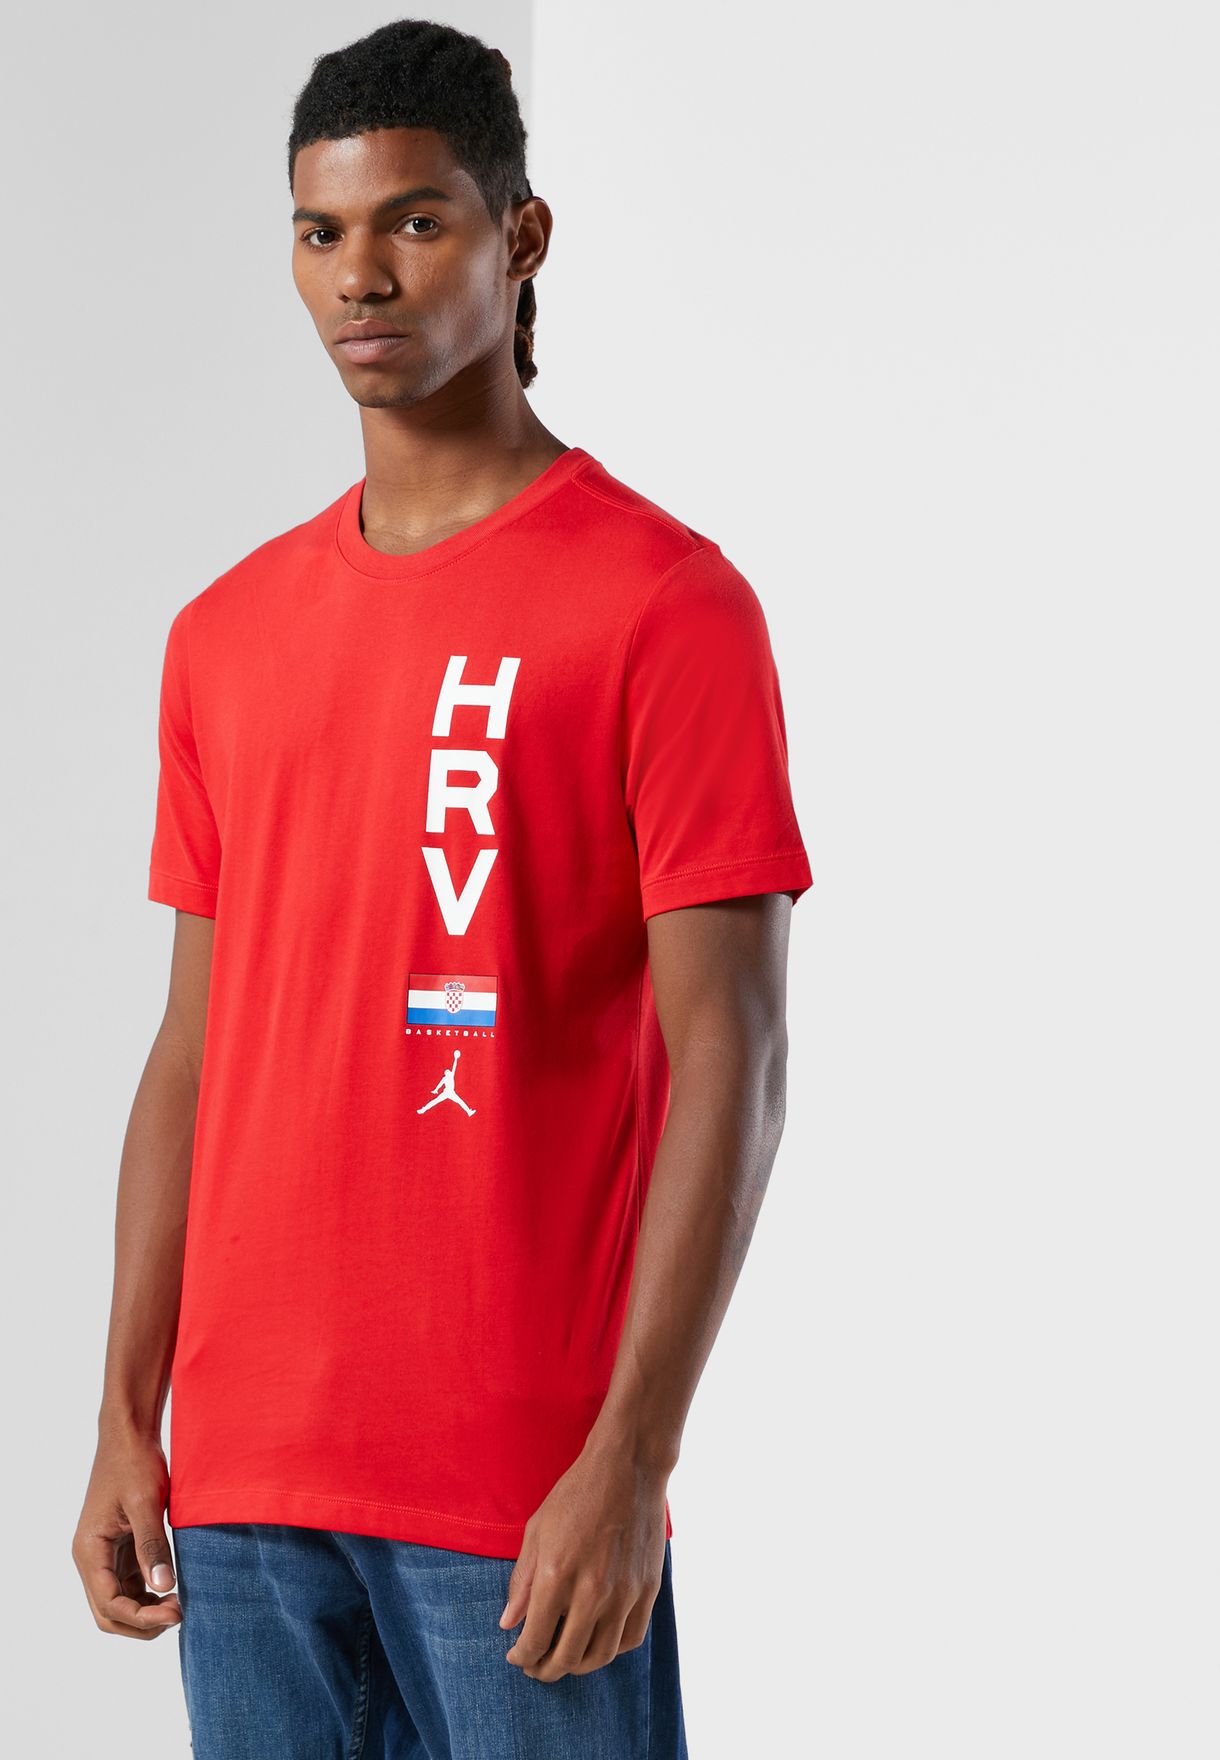 Croatia Team T-Shirt